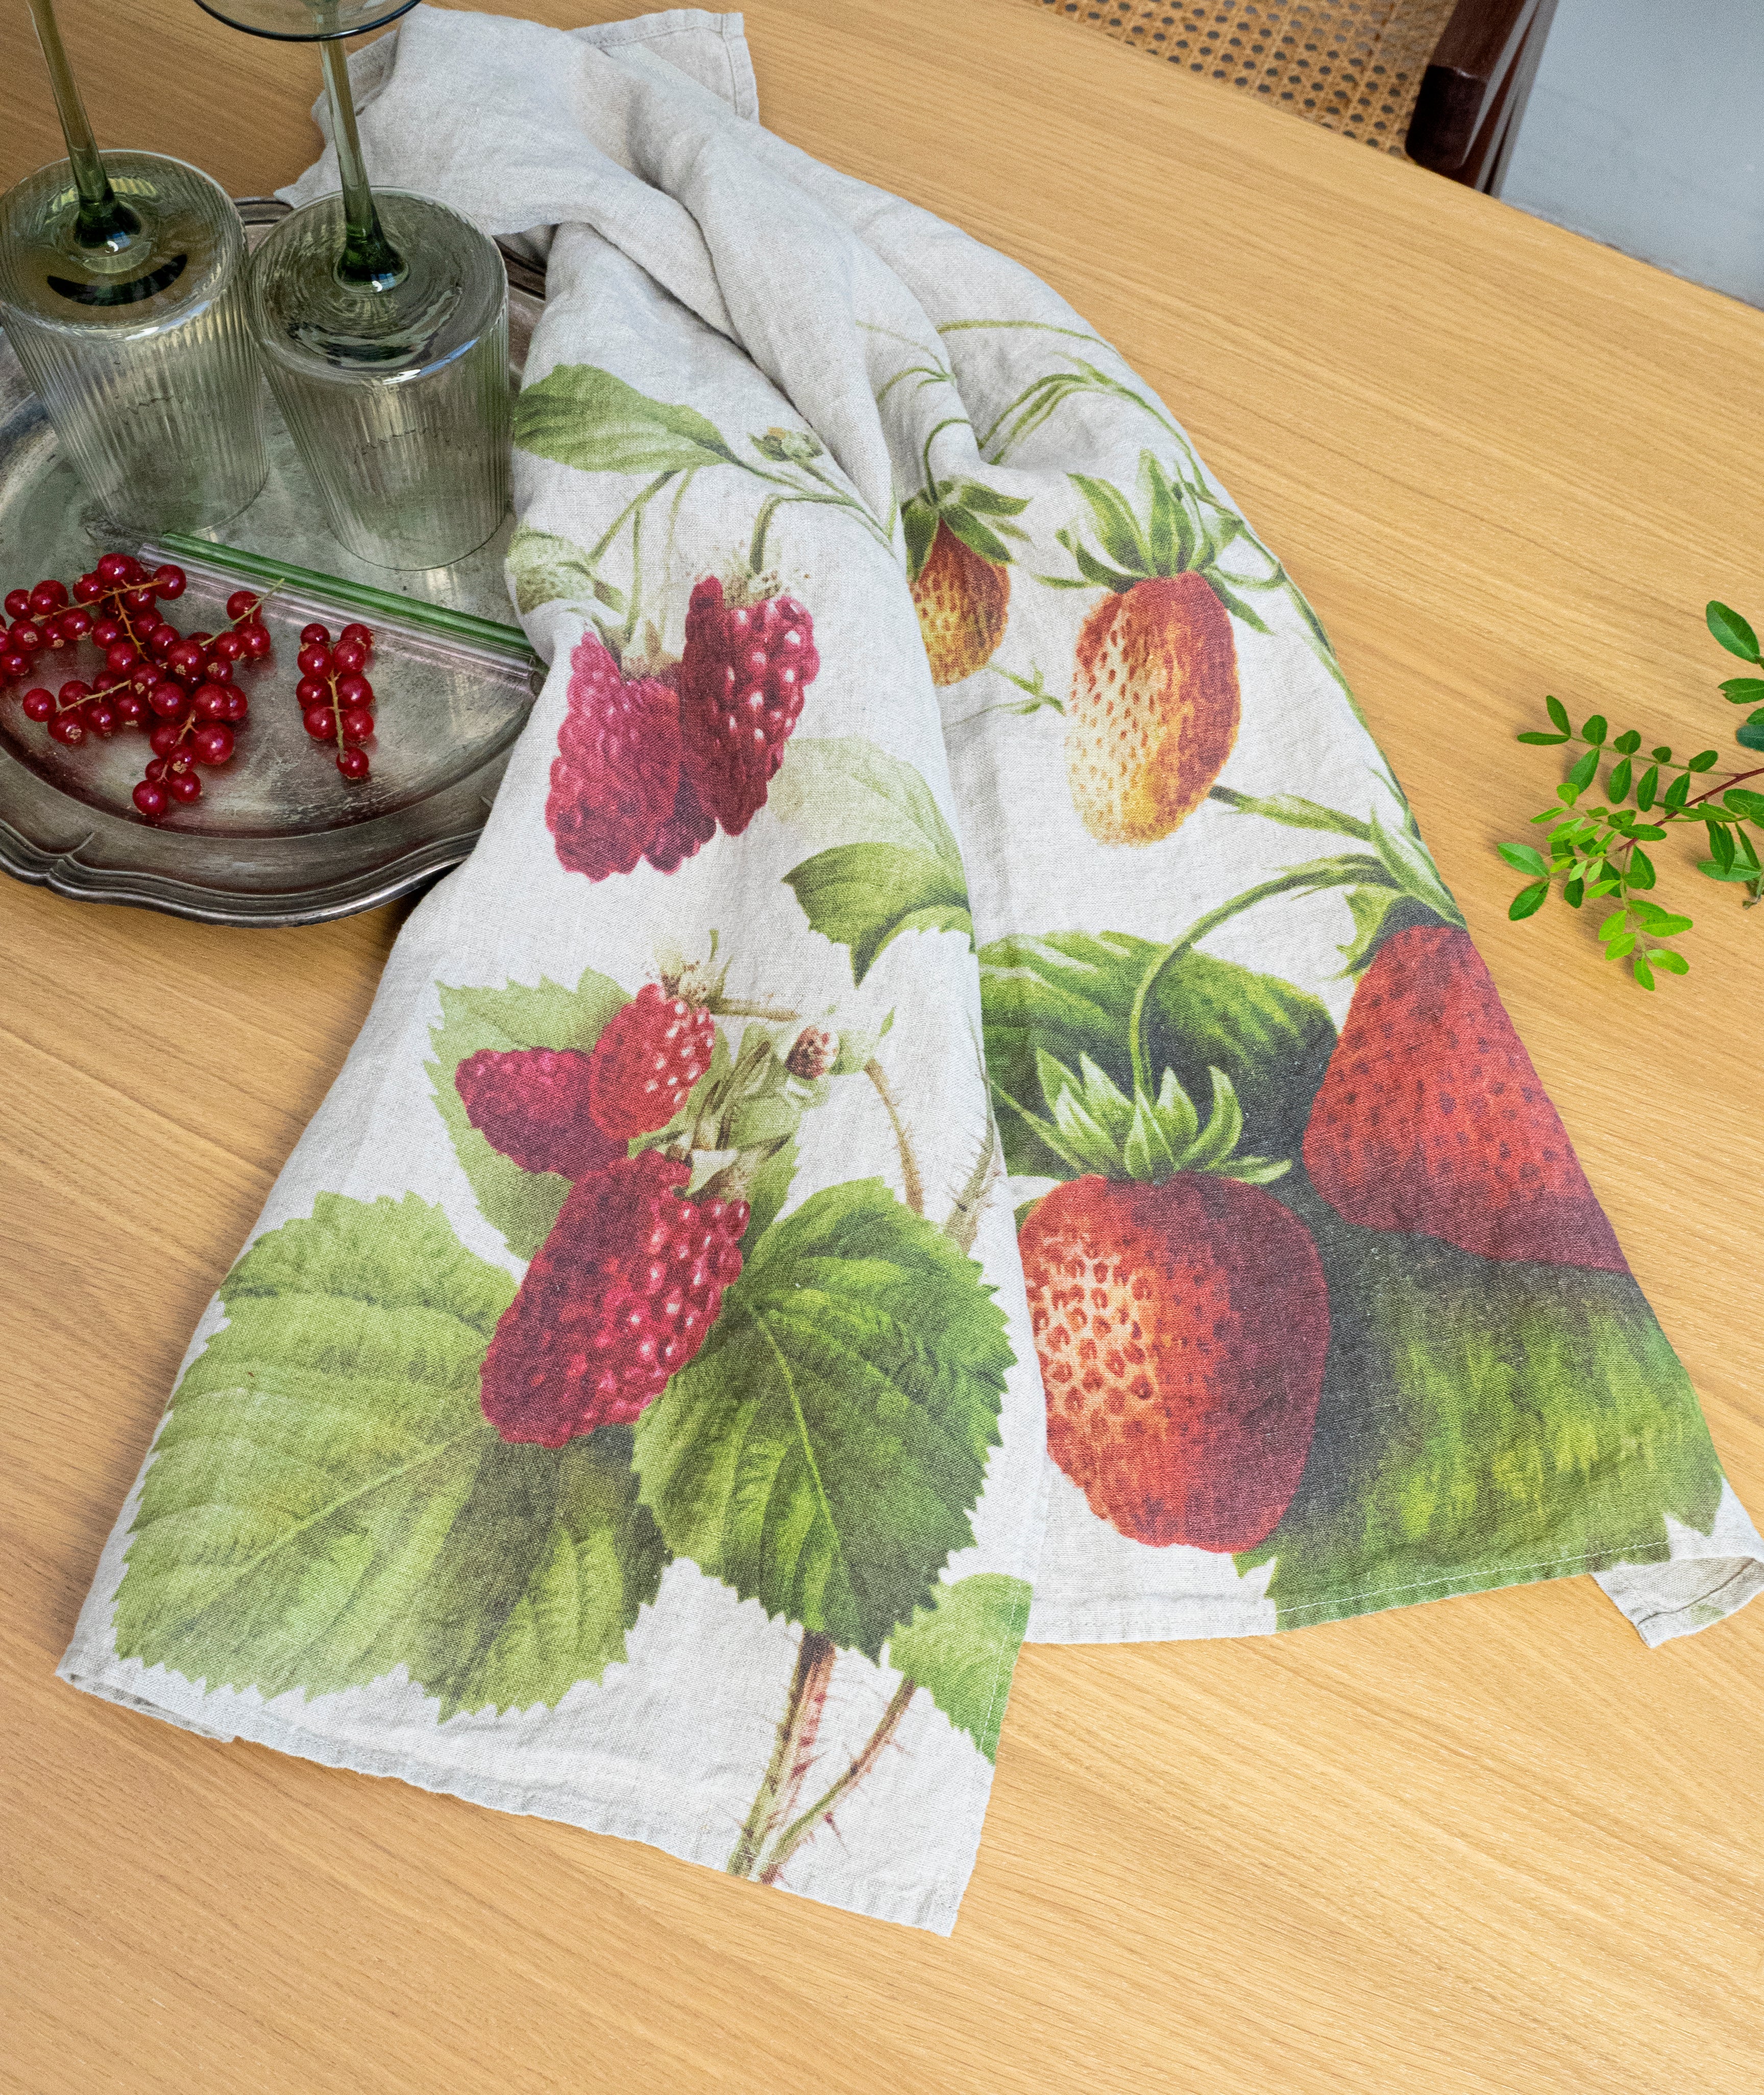 The Linoroom “Strawberry & Raspberry,” Pair of linen printed tea towels.